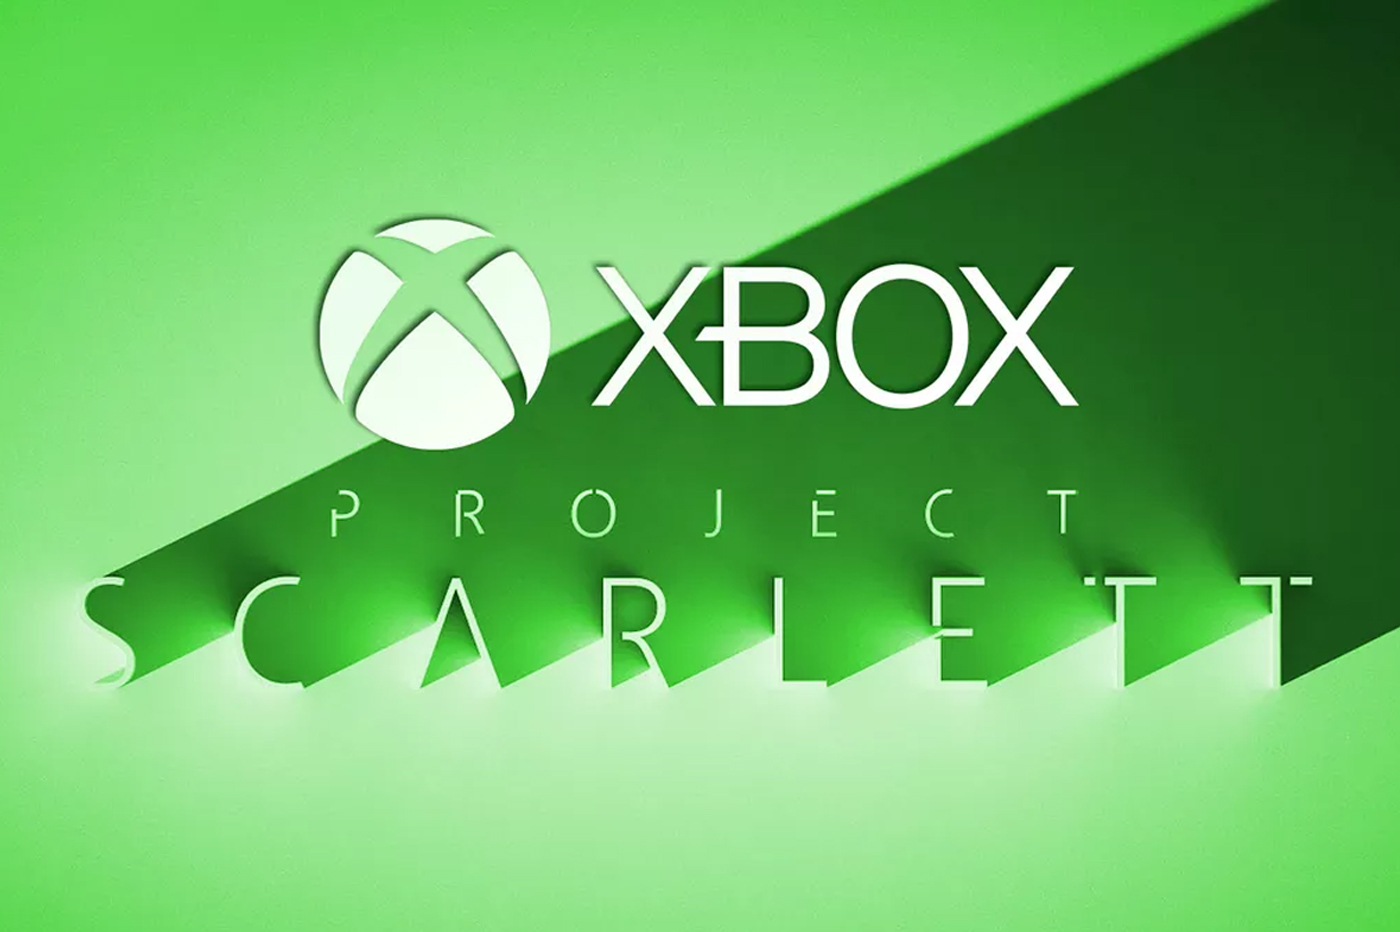 Projet Microsoft Xbox Scarlett : La nouvelle console avec service de streaming en nuage